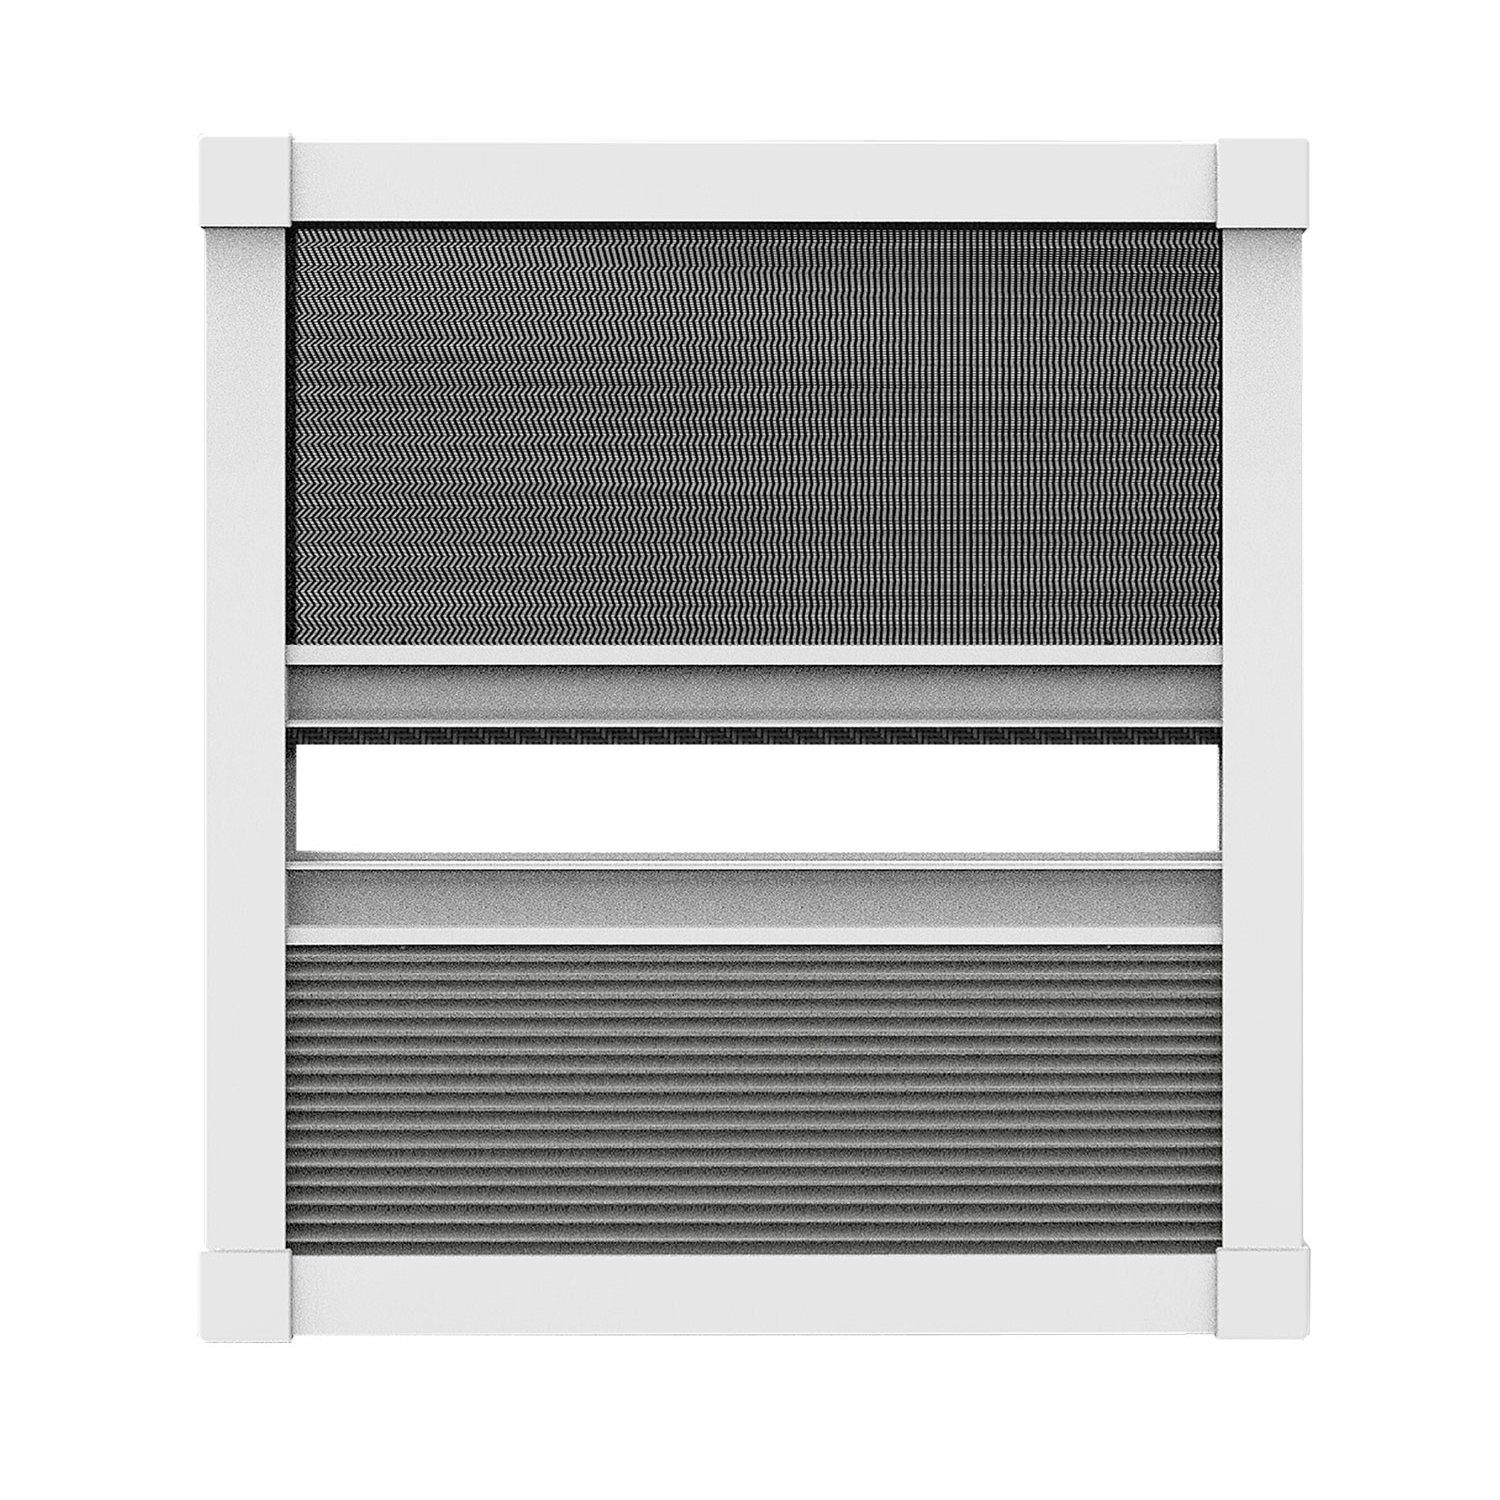 Insektenschutzplissee Nematek® Fliegengitter DUO-Plissee für Dachfenster Insektenschutz Dachfensterplissee in verschiedenen Größen, Nematek